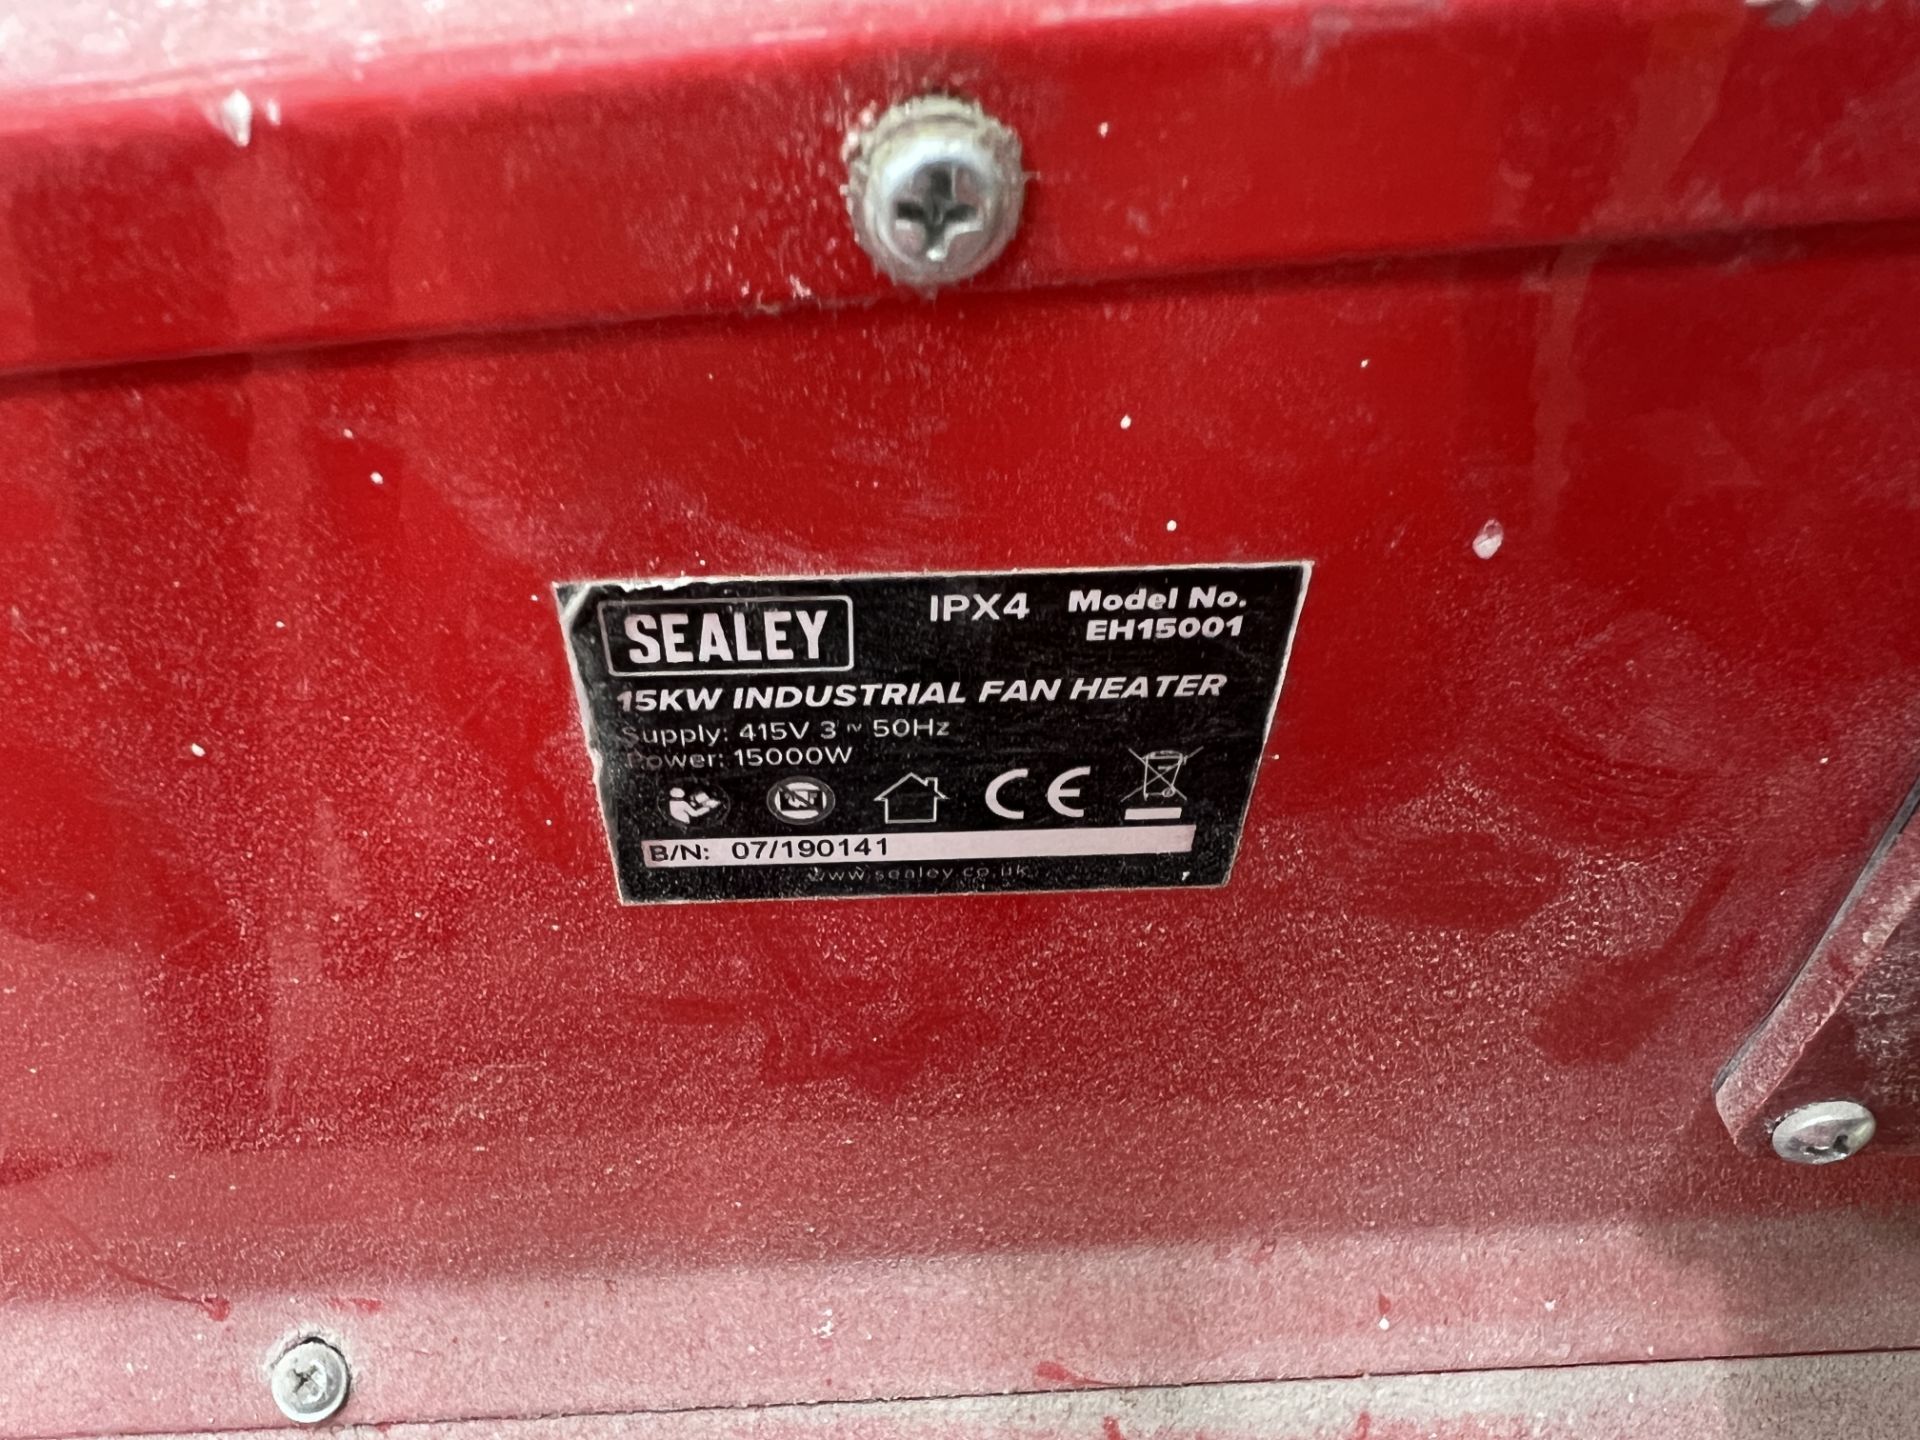 3x (no.) Sealey, IPX4 EH15001, 15kw industrial fan heater, 415v, 15000 watts - Image 3 of 7